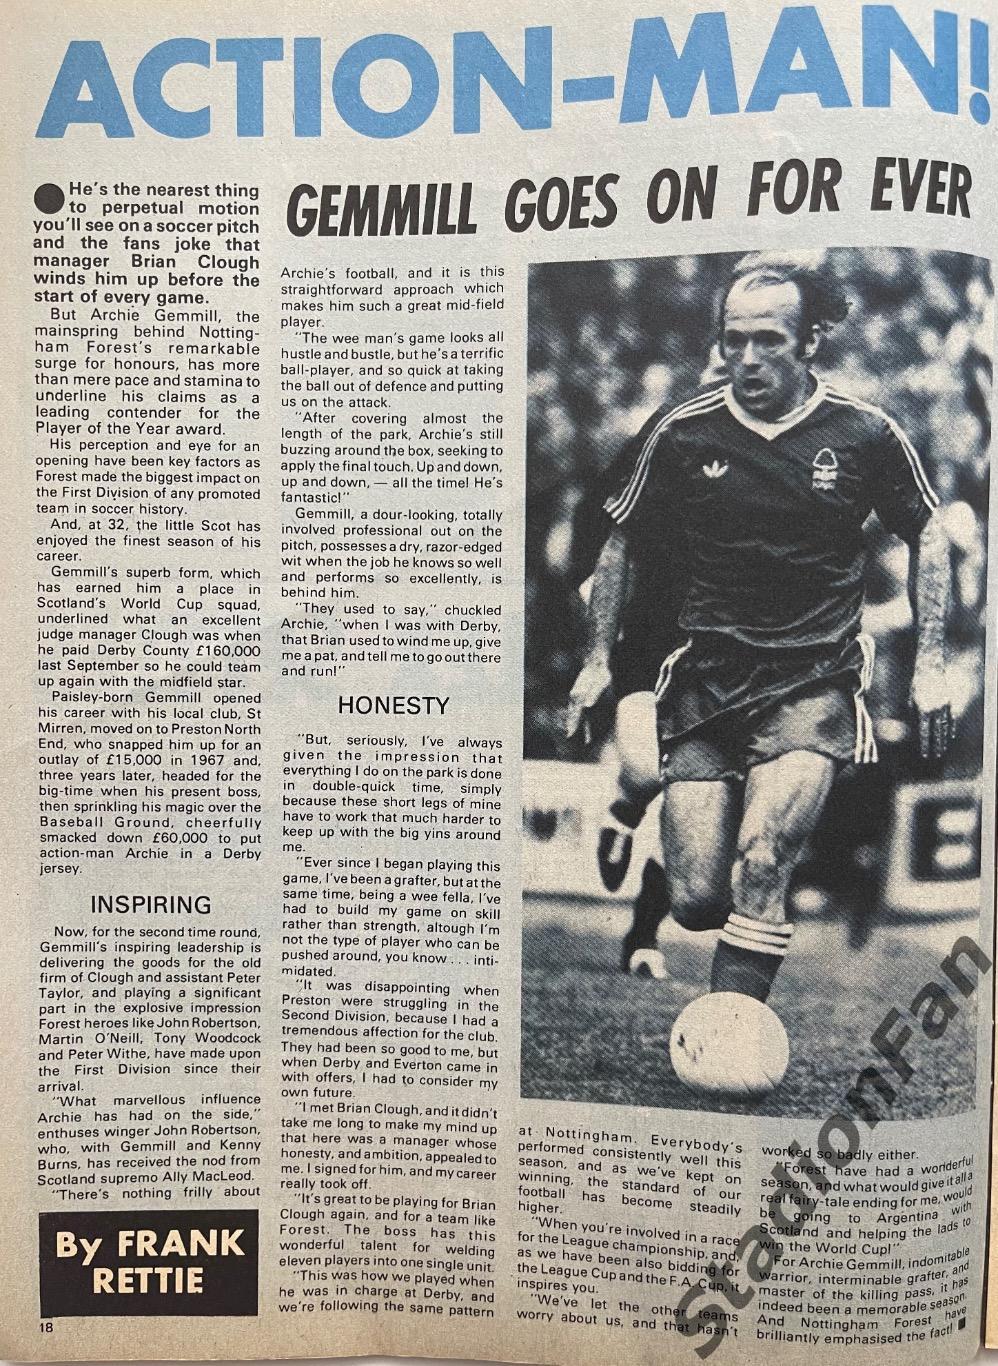 Журнал FOOTBALL - 1978 год, май. 3